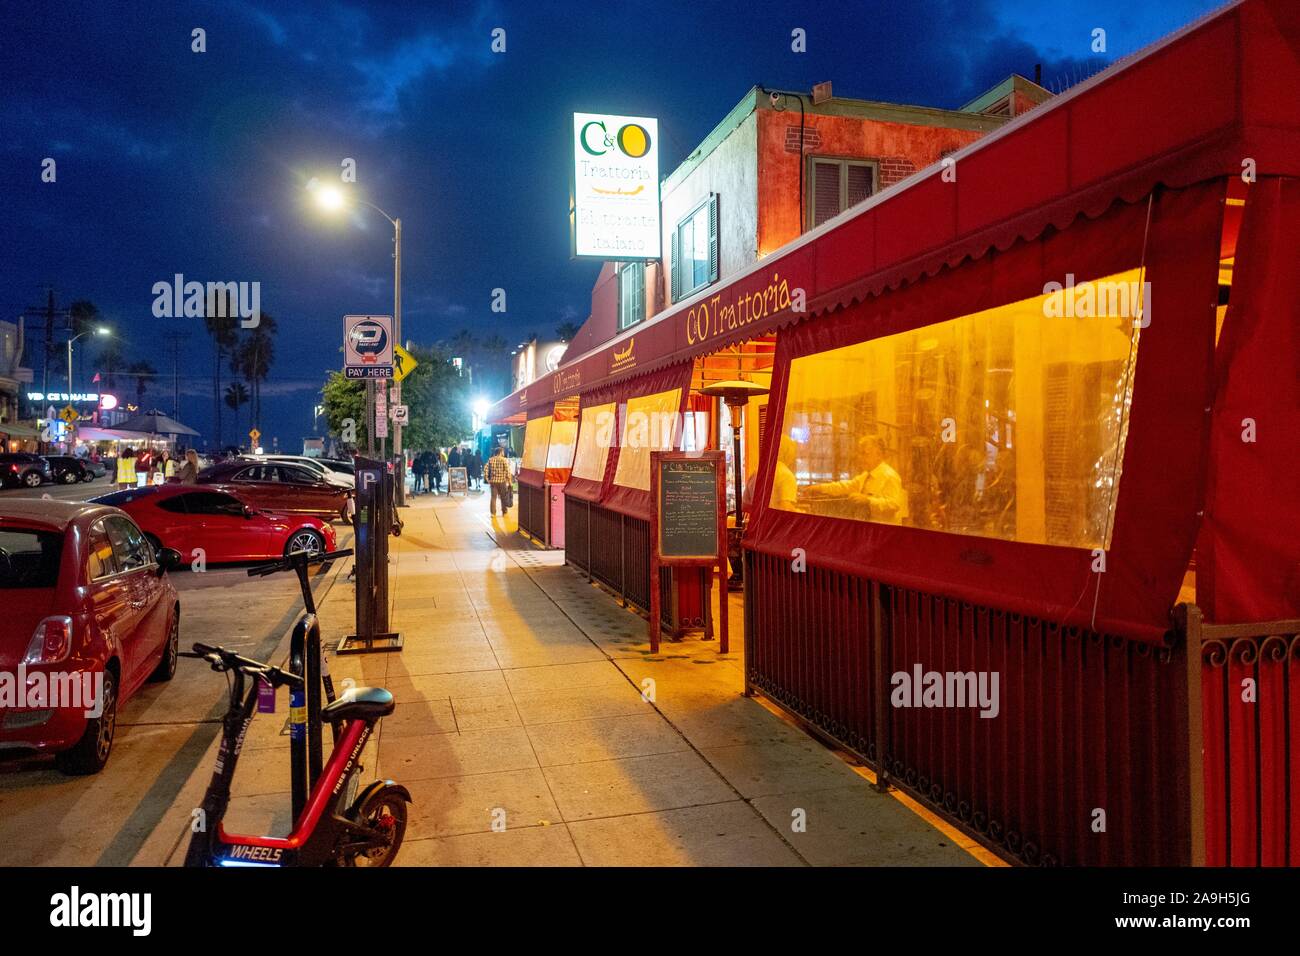 Restaurants are visible at night along Washington Blvd, a main road in Venice, Los Angeles, California, October 27, 2019. () Stock Photo